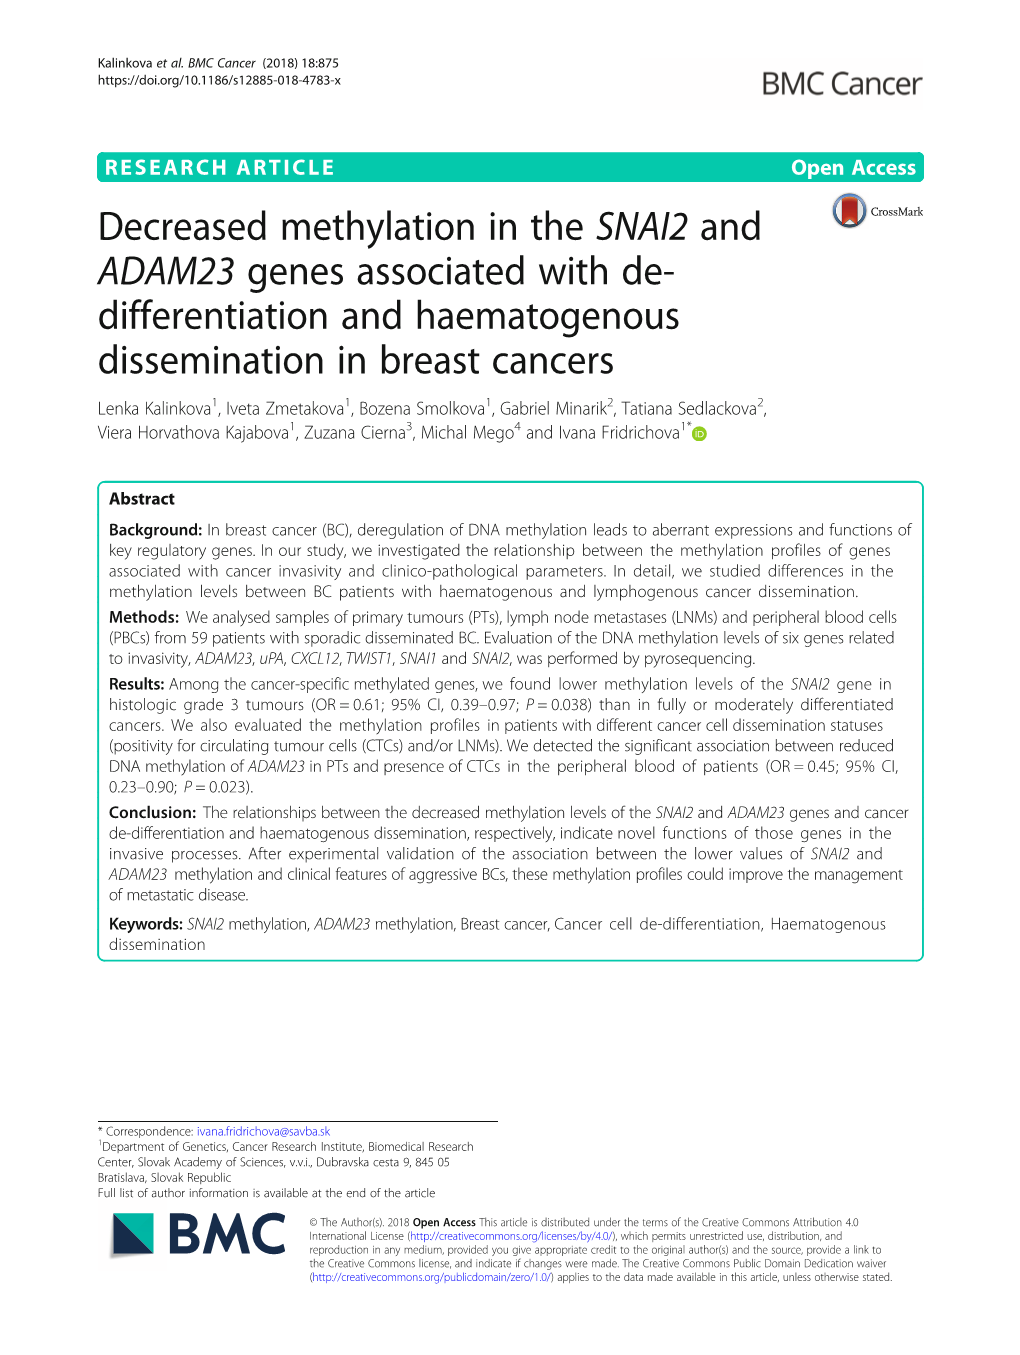 Decreased Methylation in the SNAI2 and ADAM23 Genes Associated